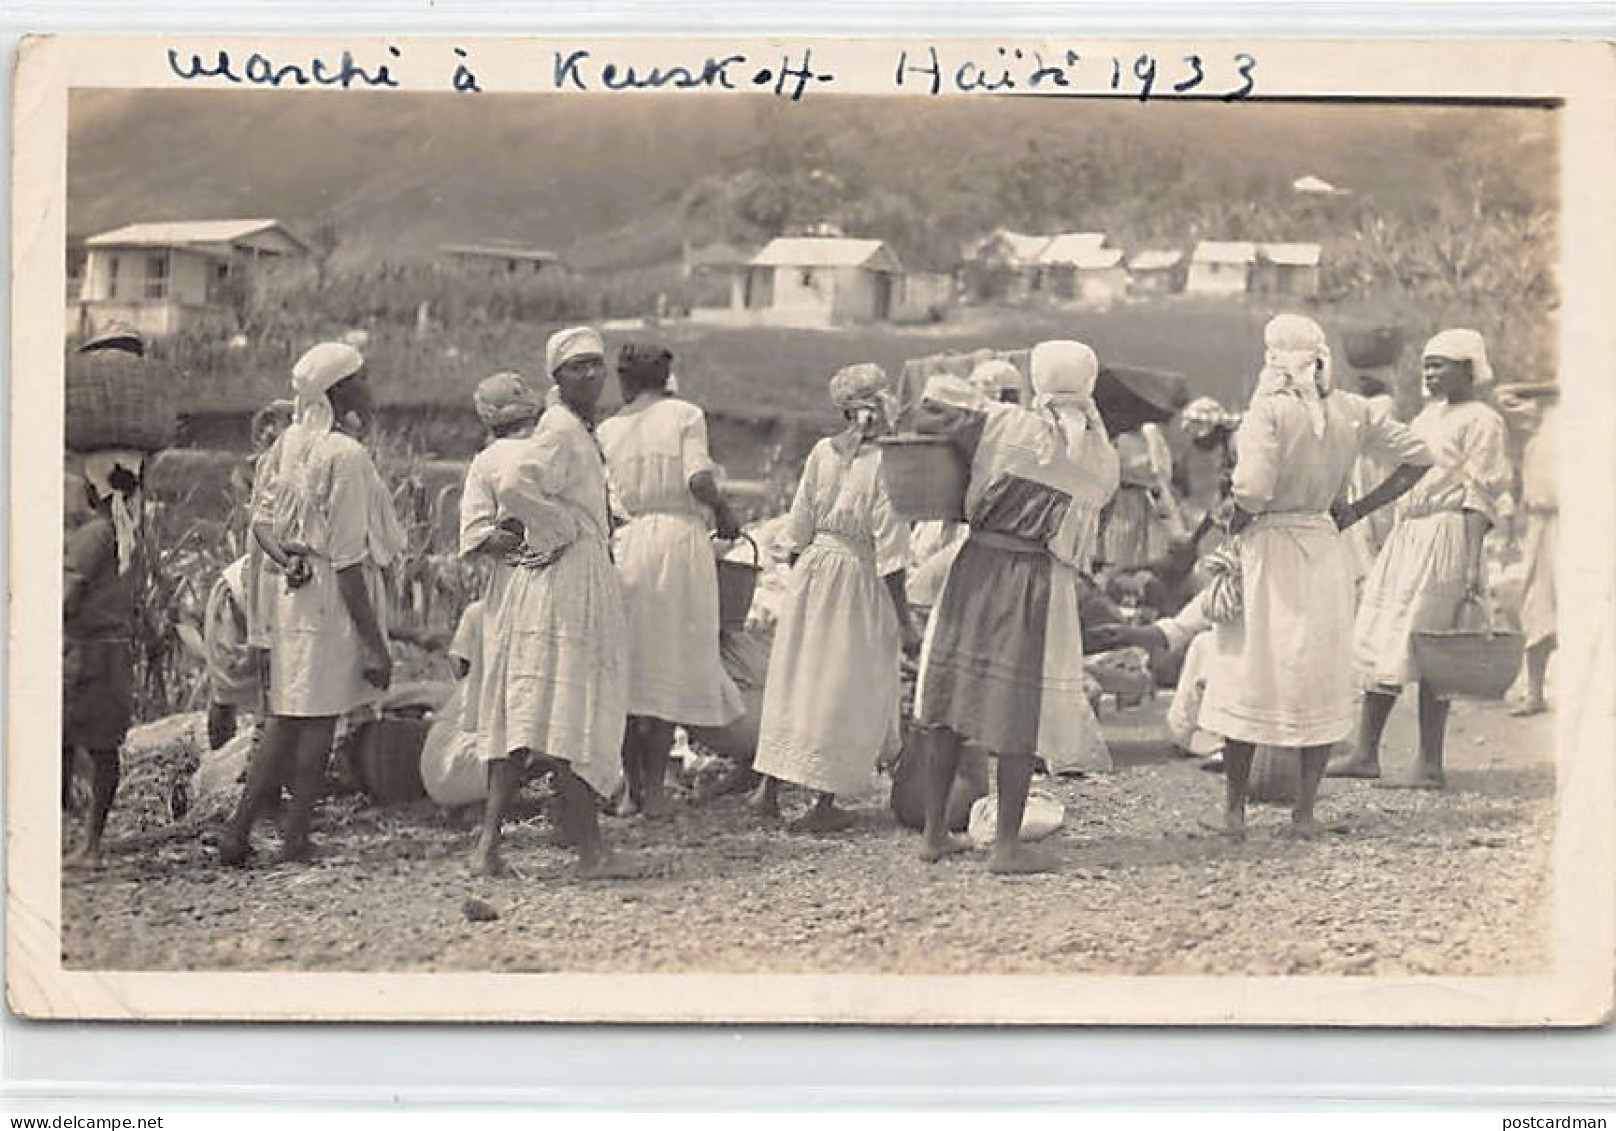 Haiti - KENSCOFF - Market, Year 1933 - PHOTOGRAPH - Publ. Unknown  - Haiti